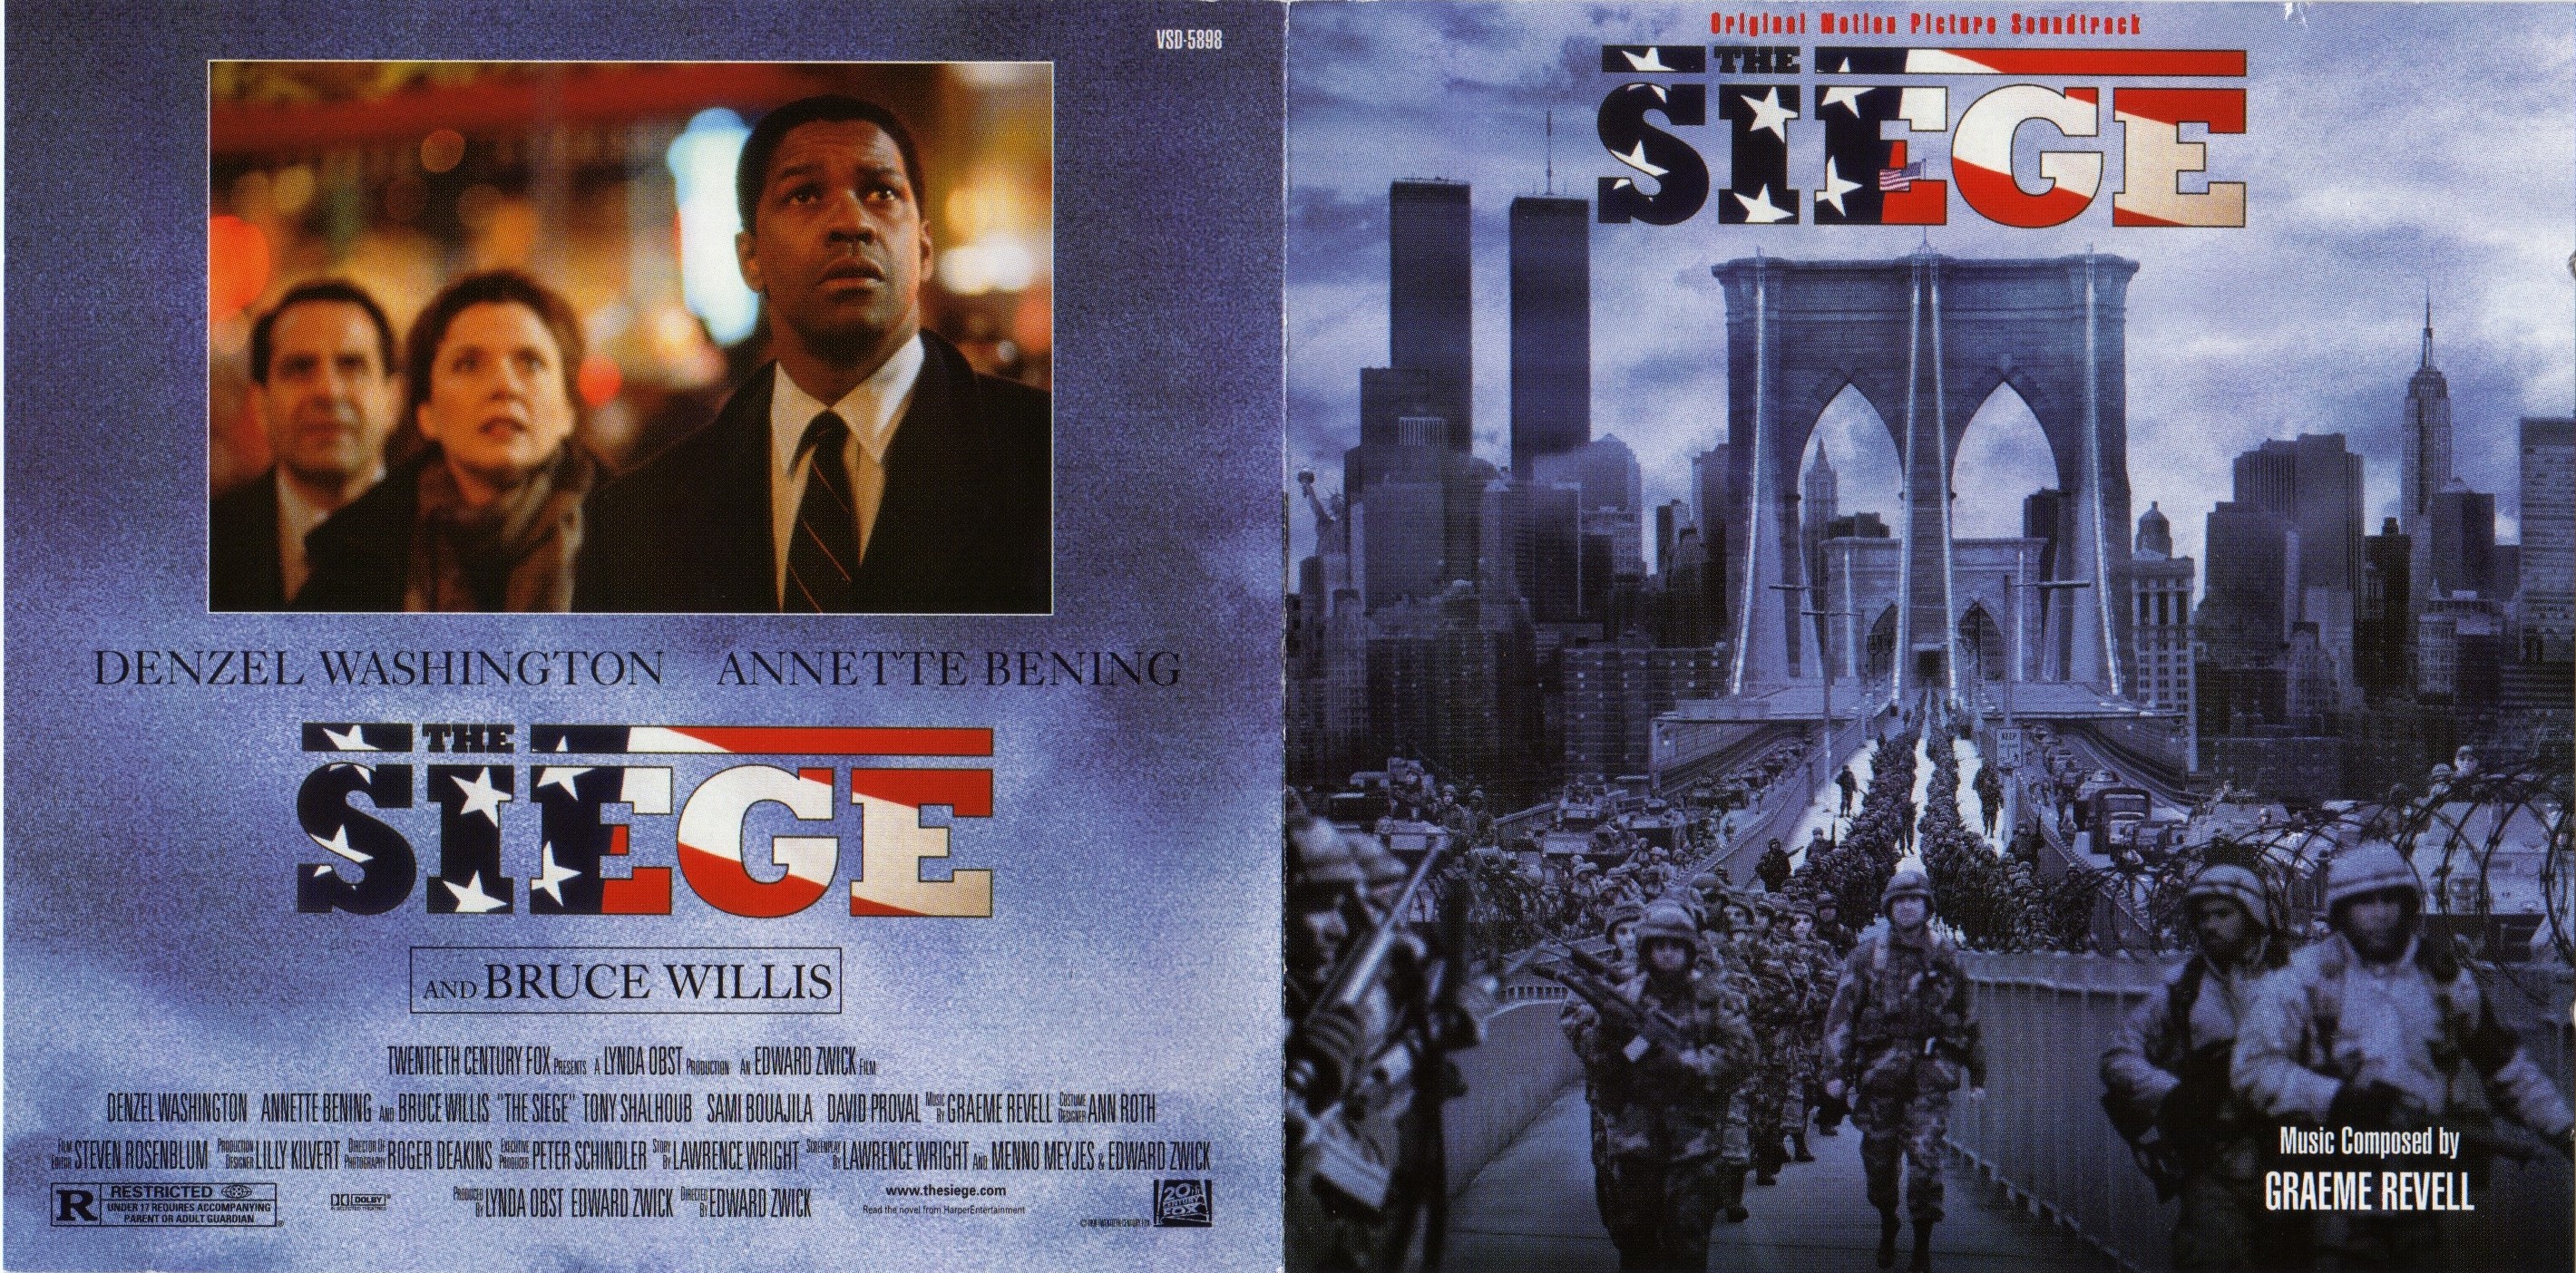 Graeme revell 3. Постер Осада - the Siege (1998). Осада 1998 Постер. The Siege OST. Робот Graeme Revell.